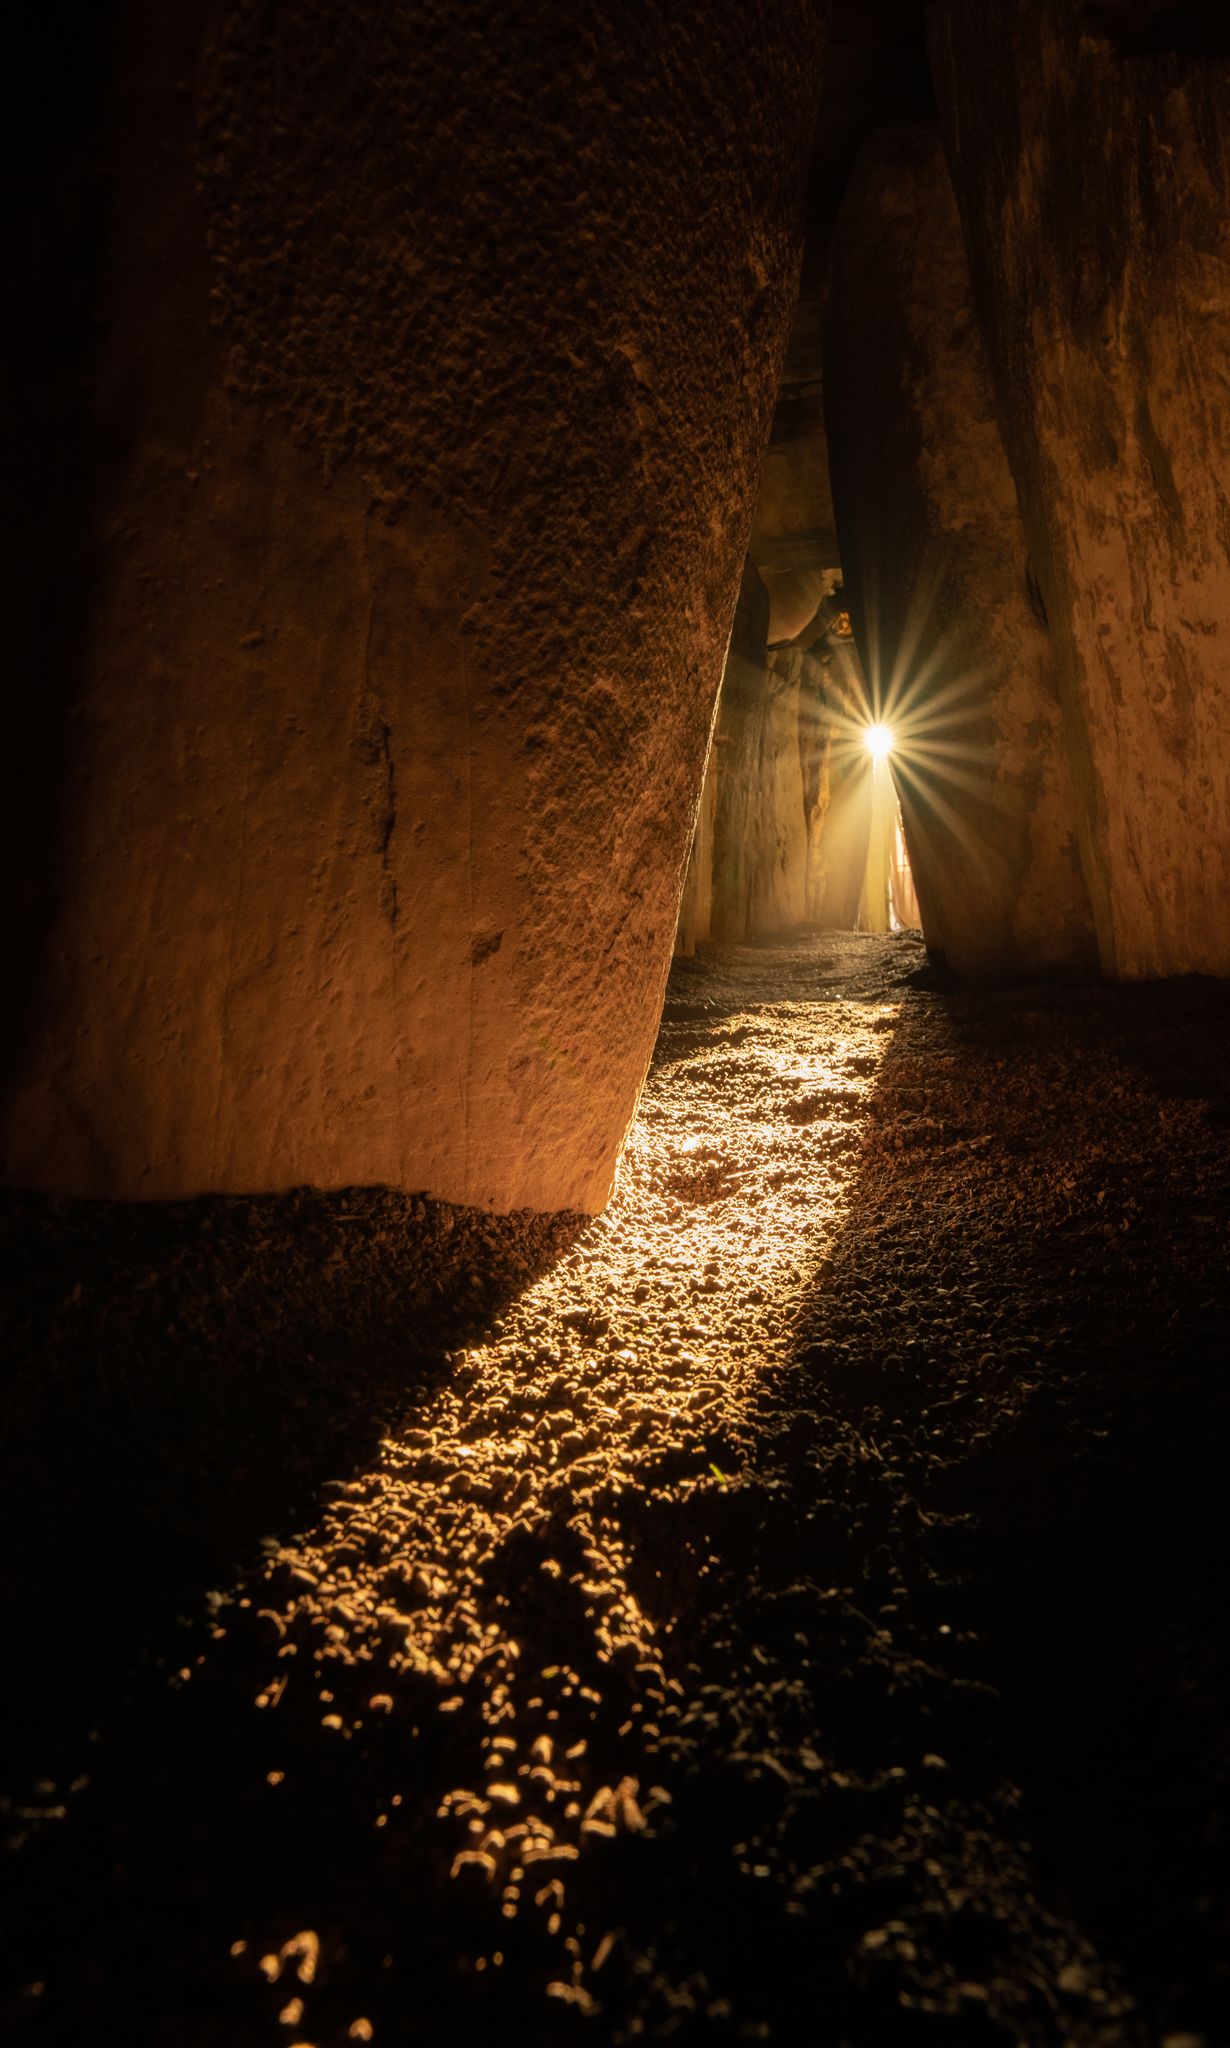 Winter solstice sunlight shining into the sacred chamber of Newgrange passage tomb. (Image: L. M. Cassidy et al., 2020)